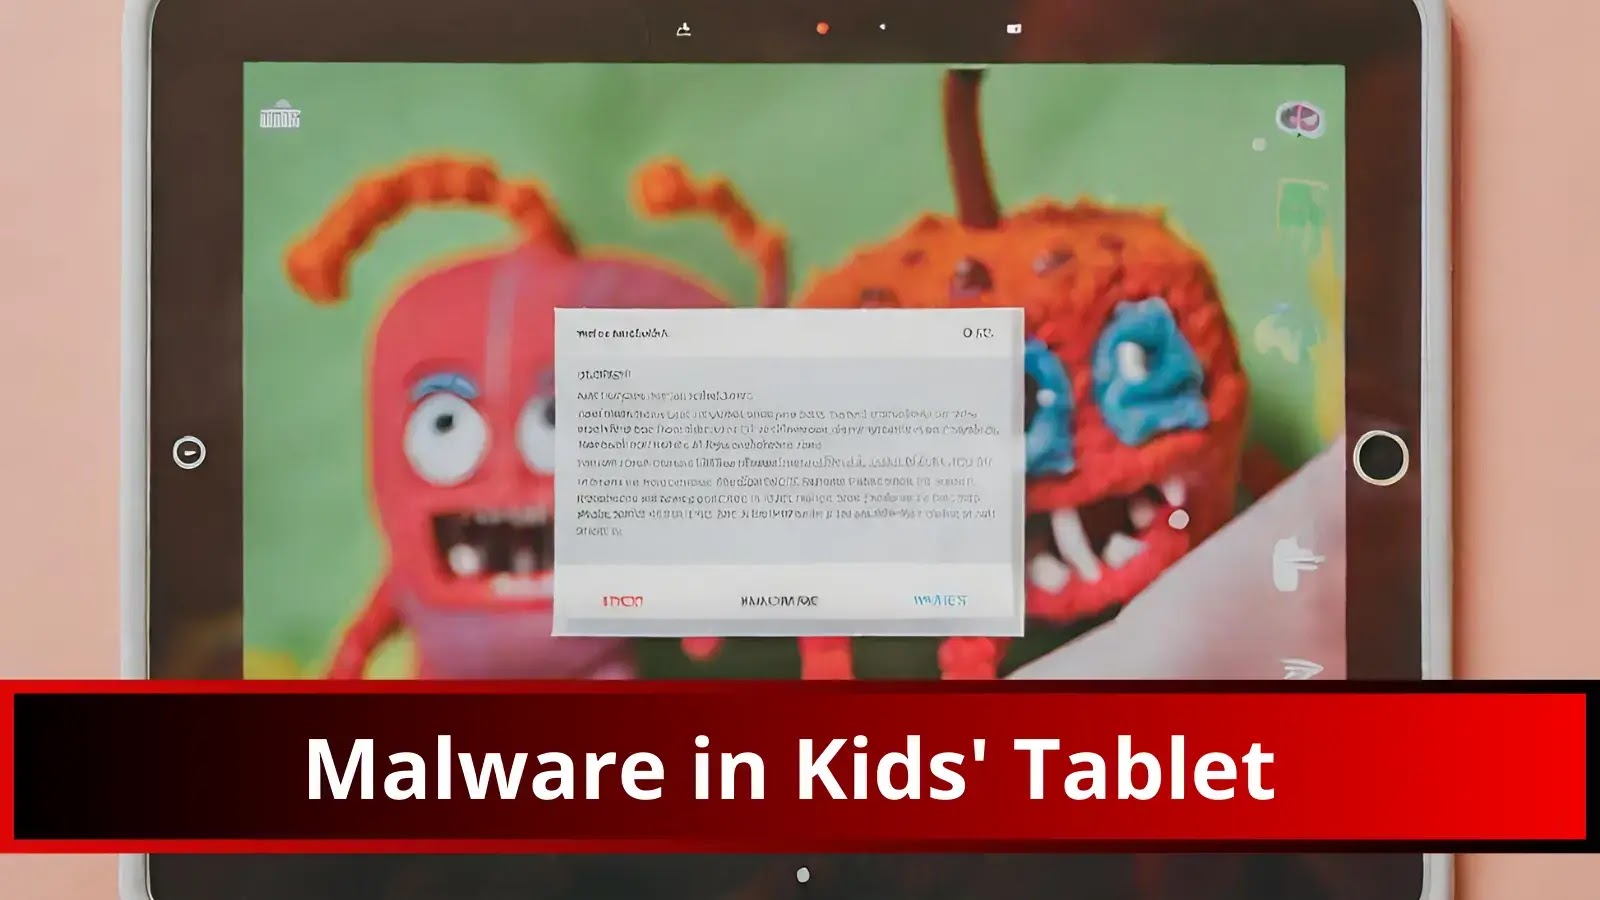 Malware Discovered in Kids’ Tablet steals sensitive data